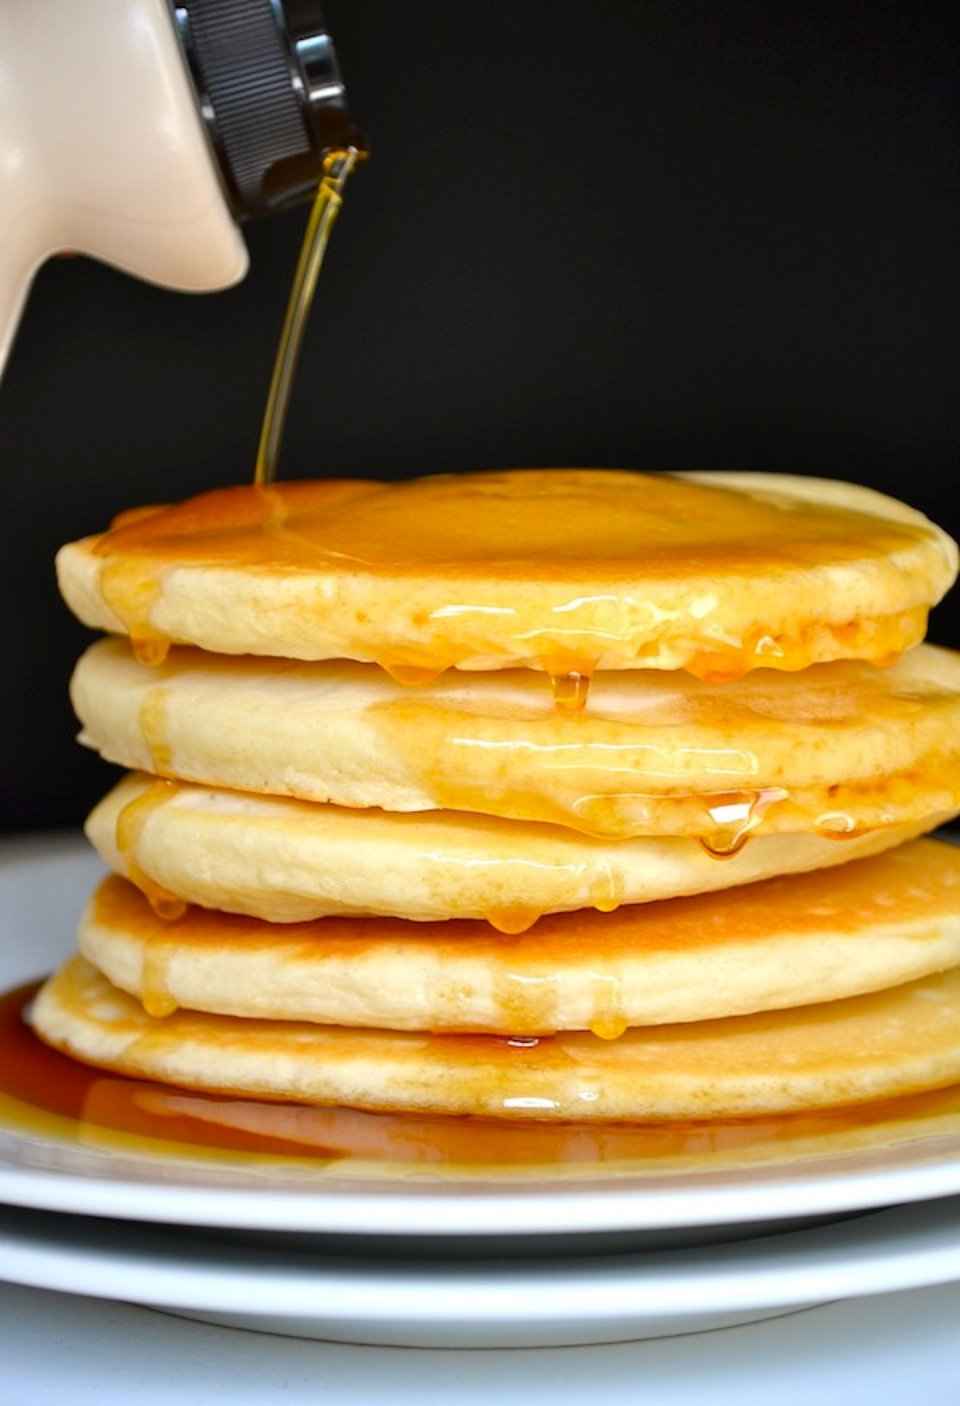 Pancakes / Панкейки